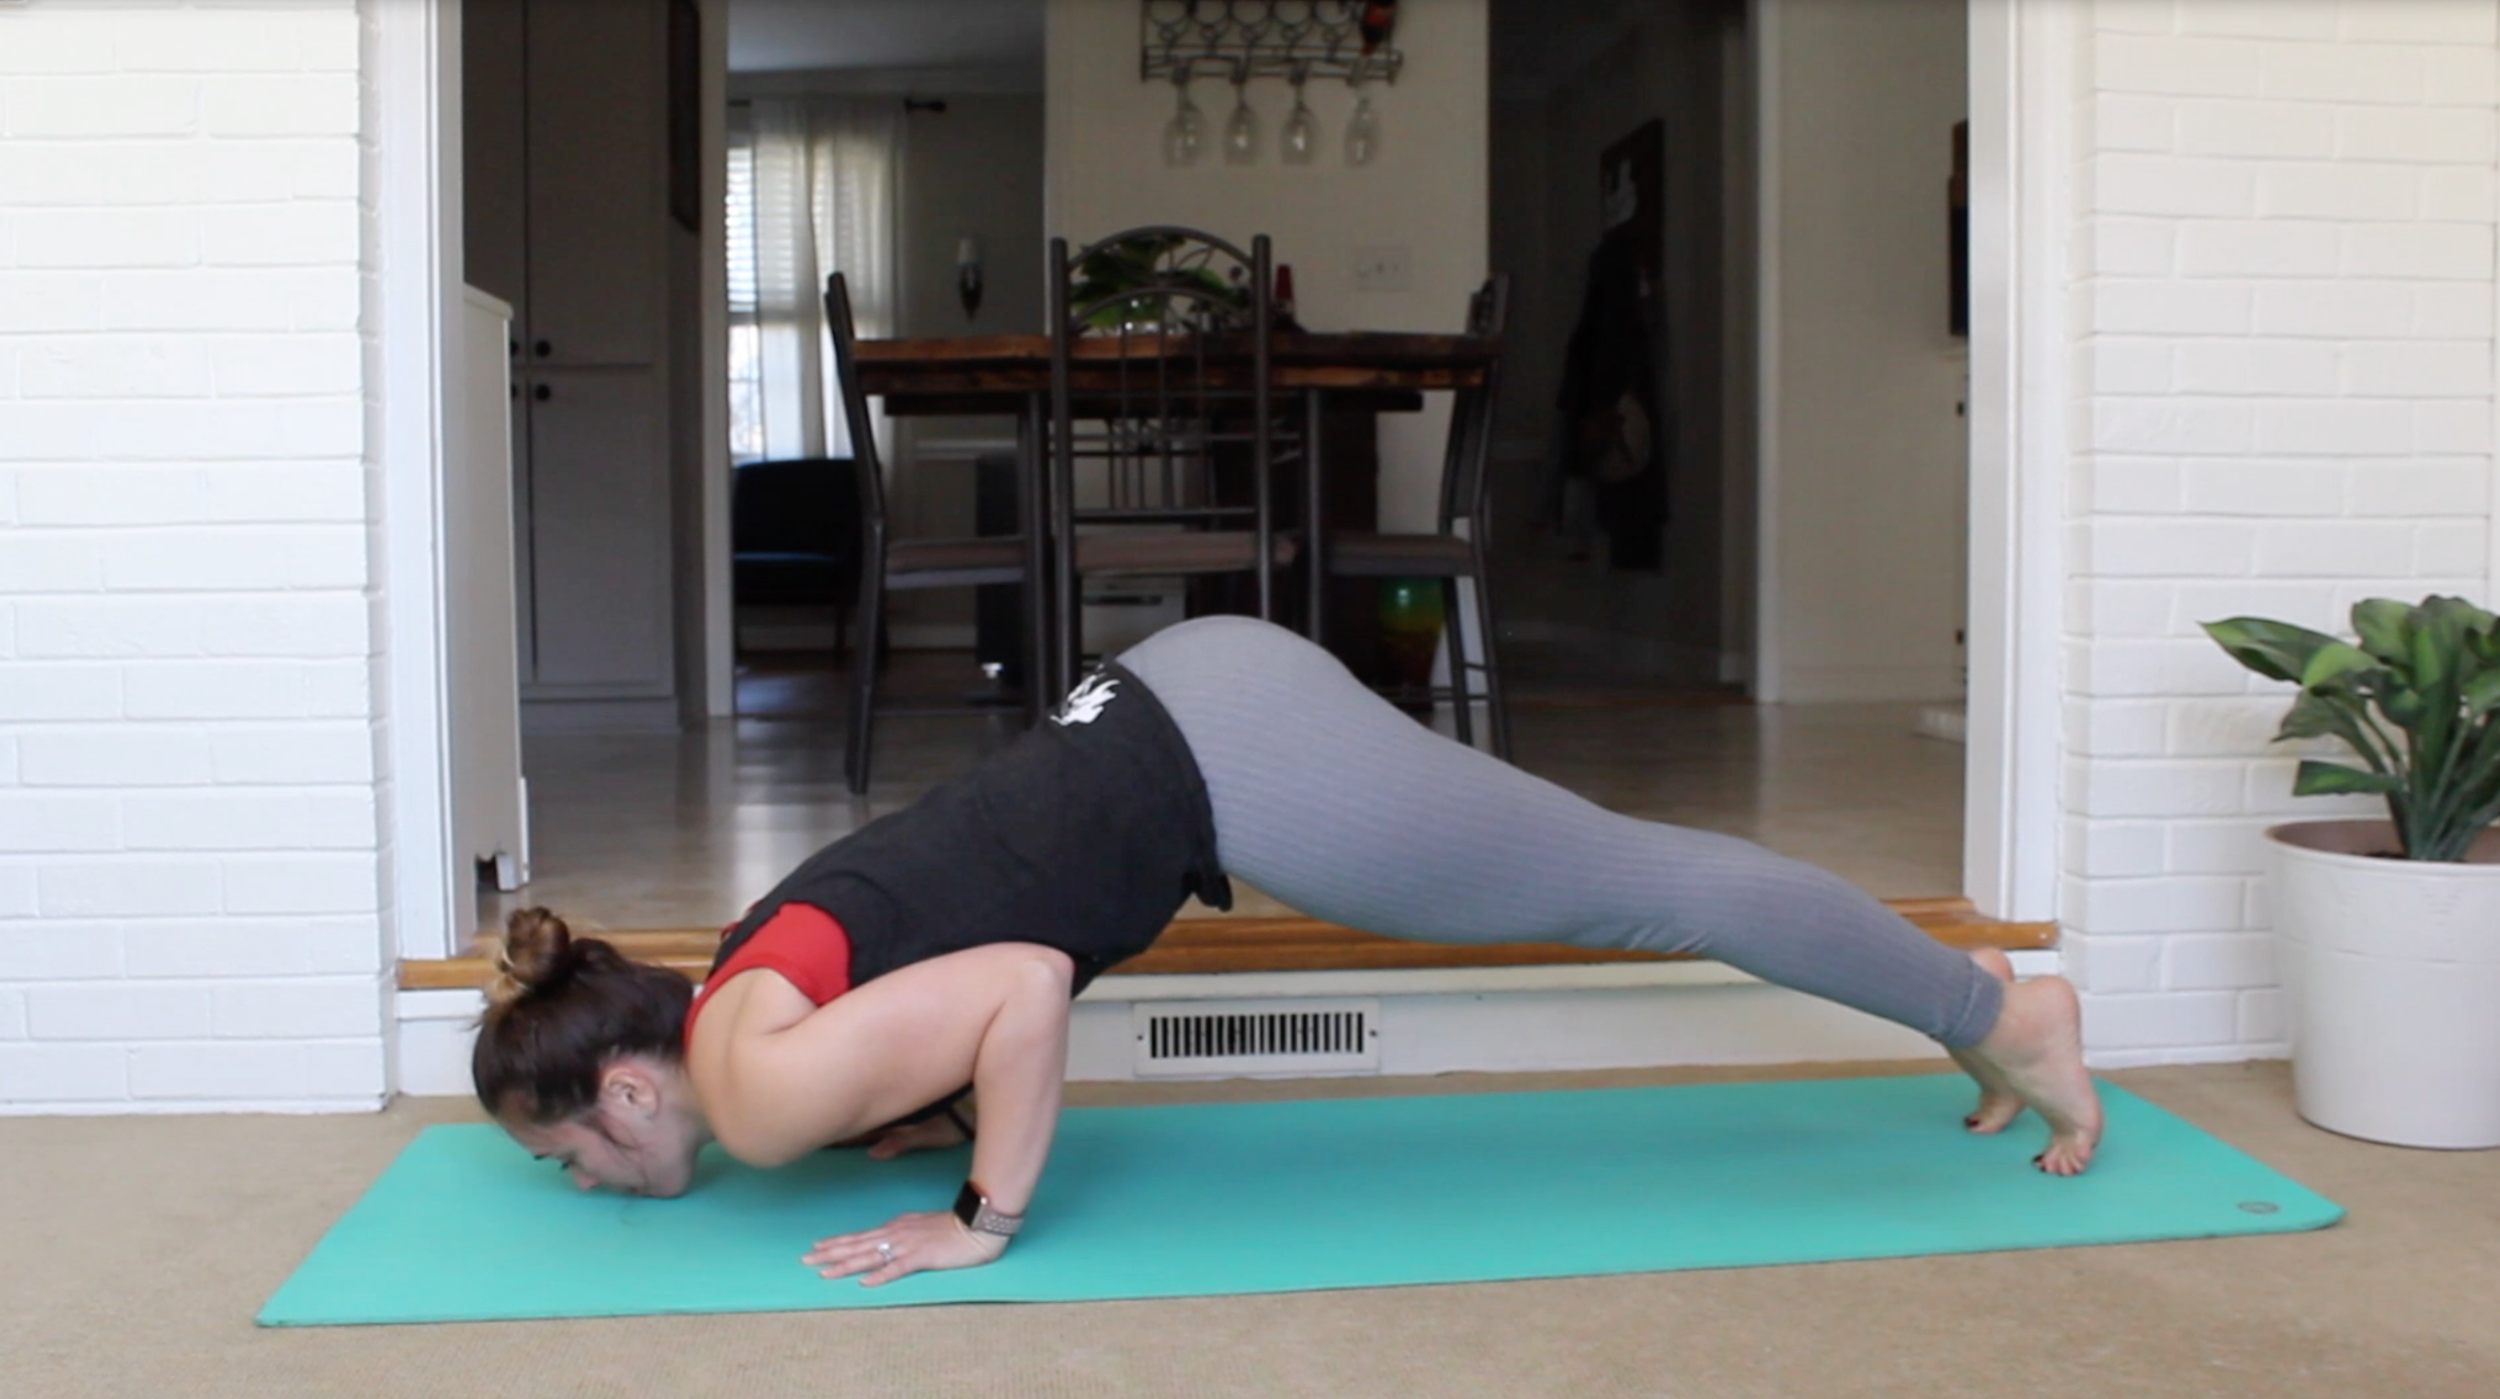 Chaturanga Dandasana Yoga Pose: How to Do It With Perfect Form